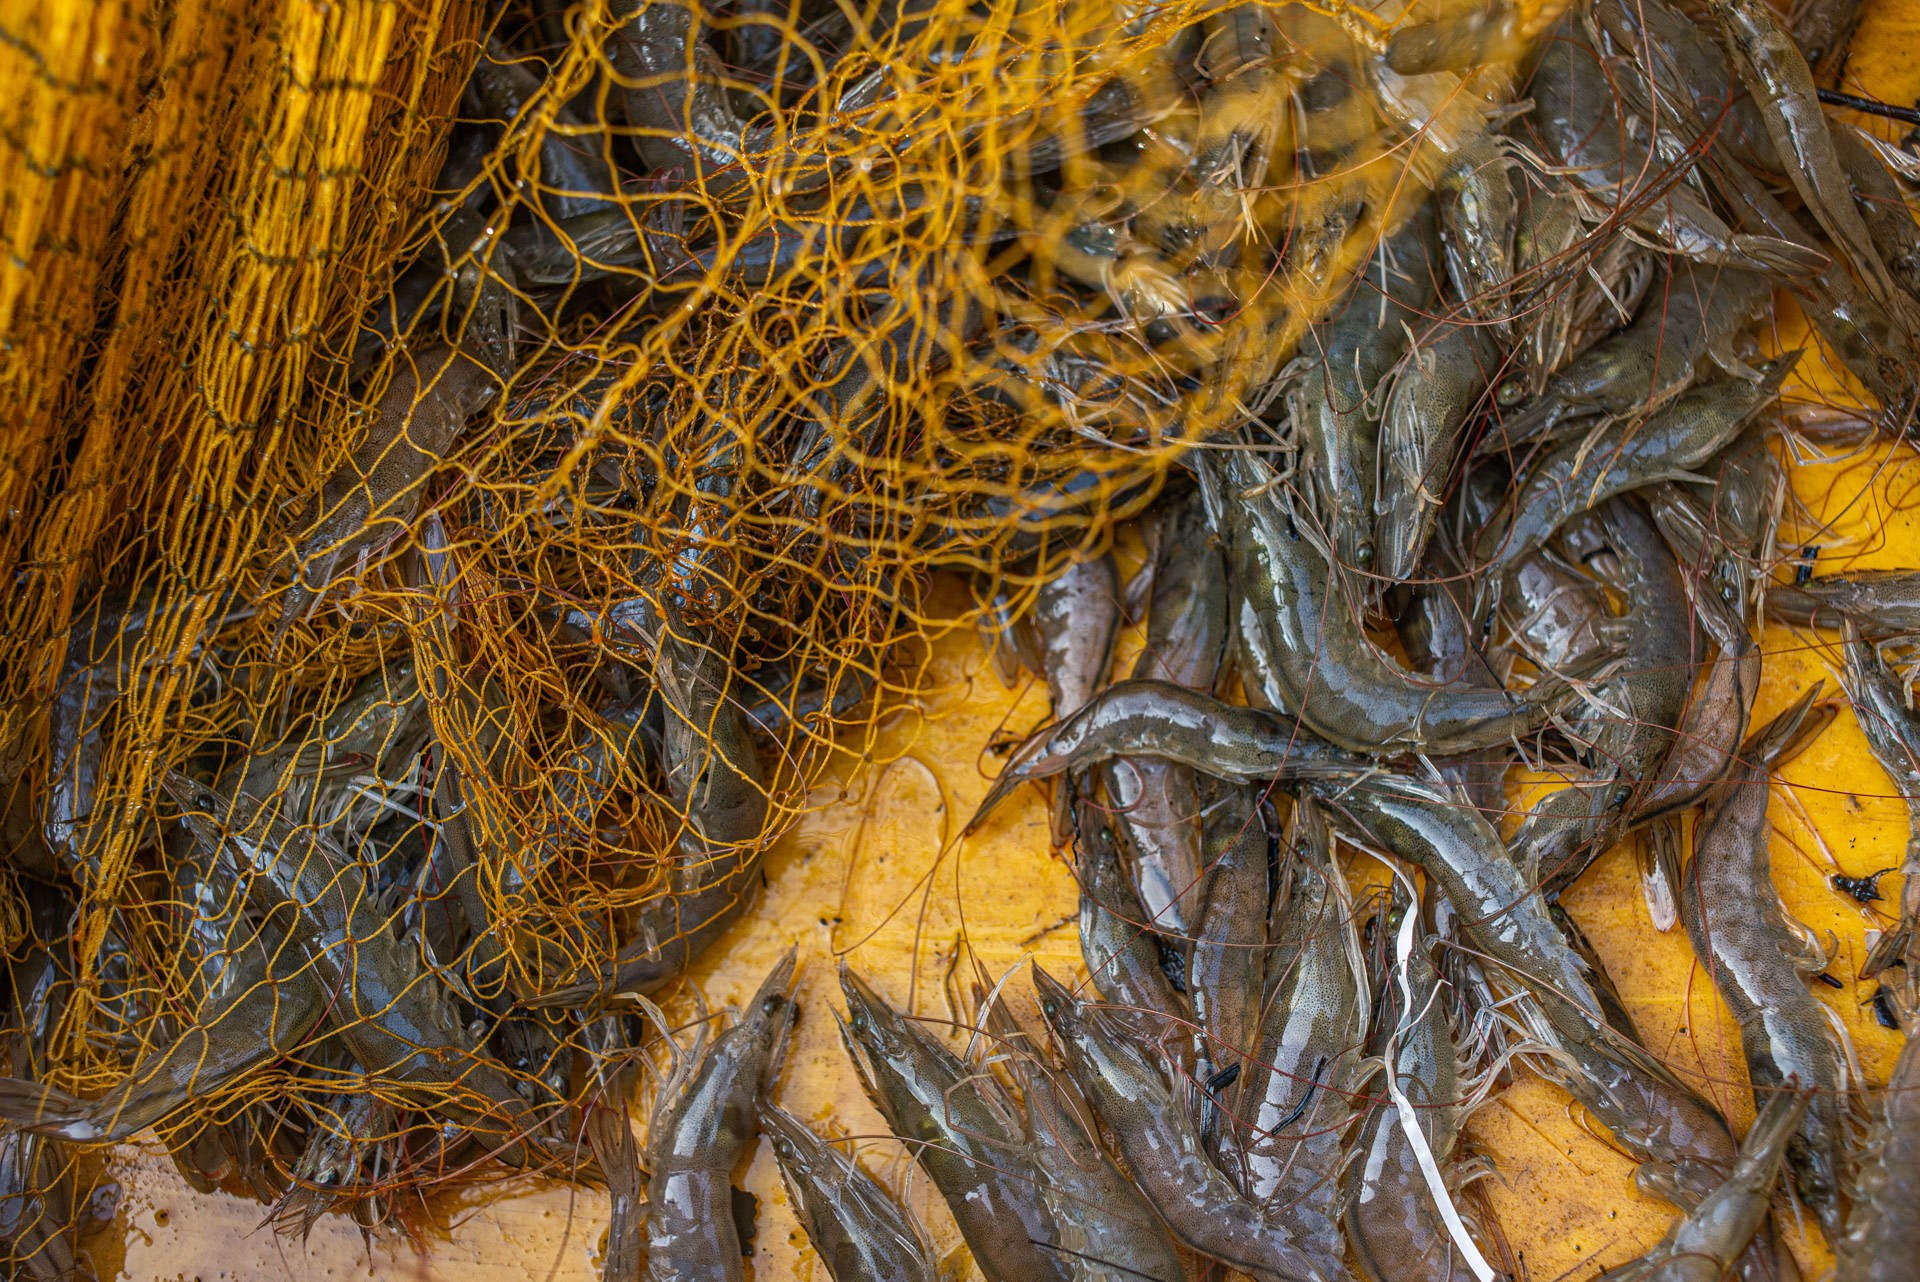 Freshly caught live shrimps and prawns are entangled in a harvesting net at an aquafarm. Matlapalem, Andhra Pradesh, India, 2022. S. Chakrabarti / We Animals Media